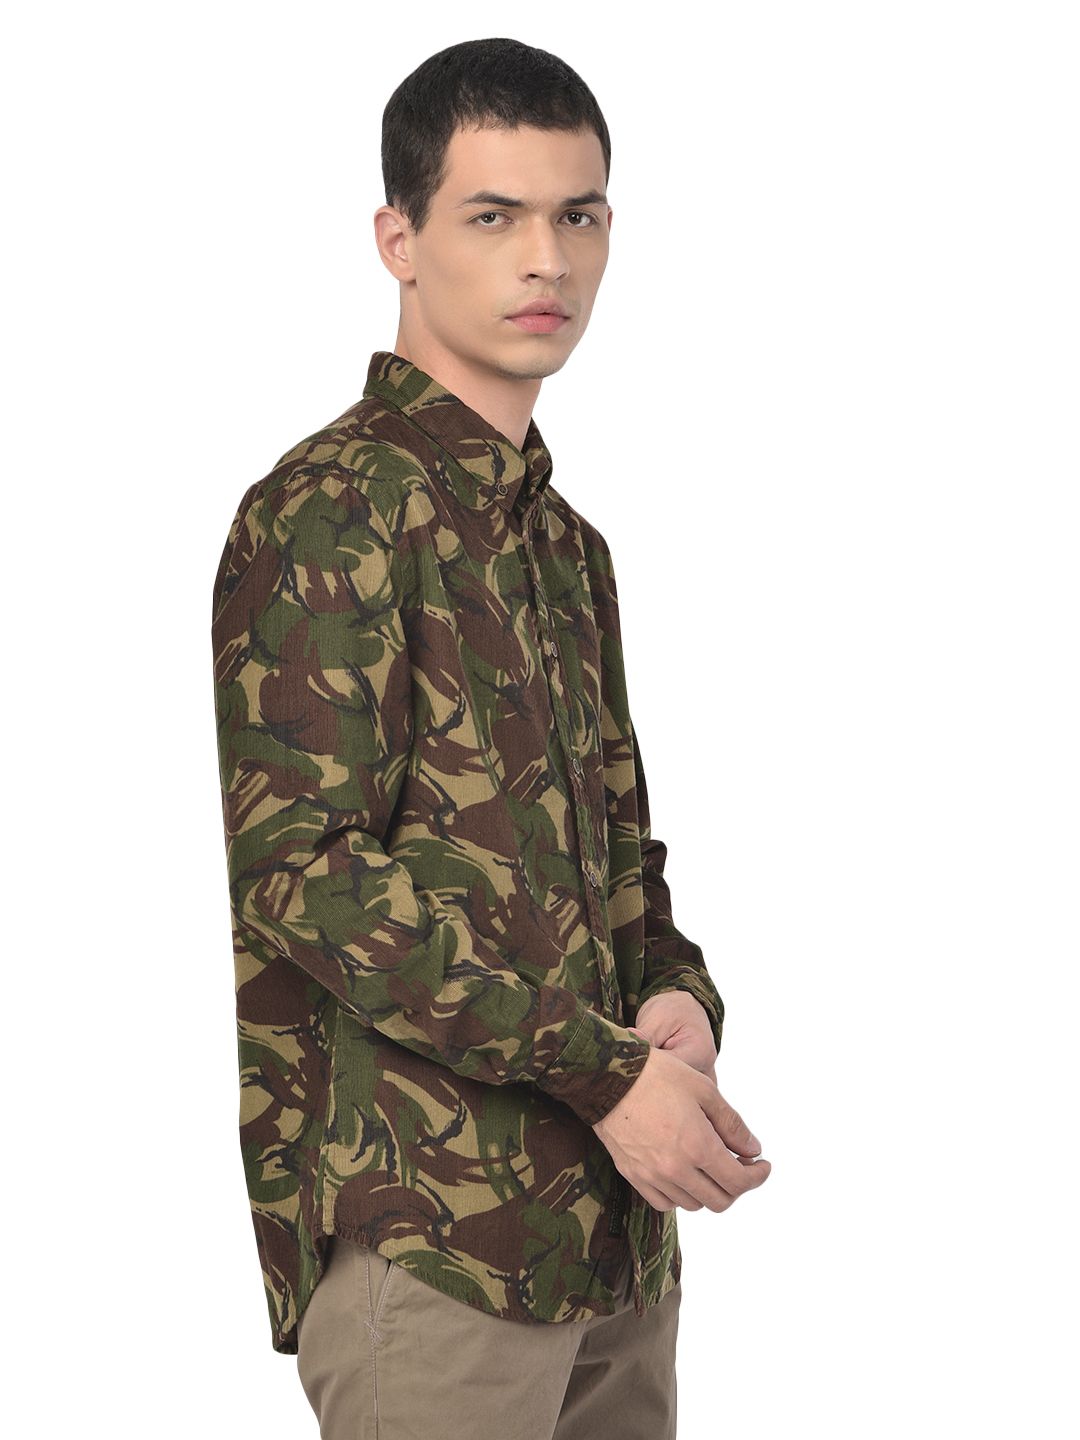 Camouflage Multi shirt for men